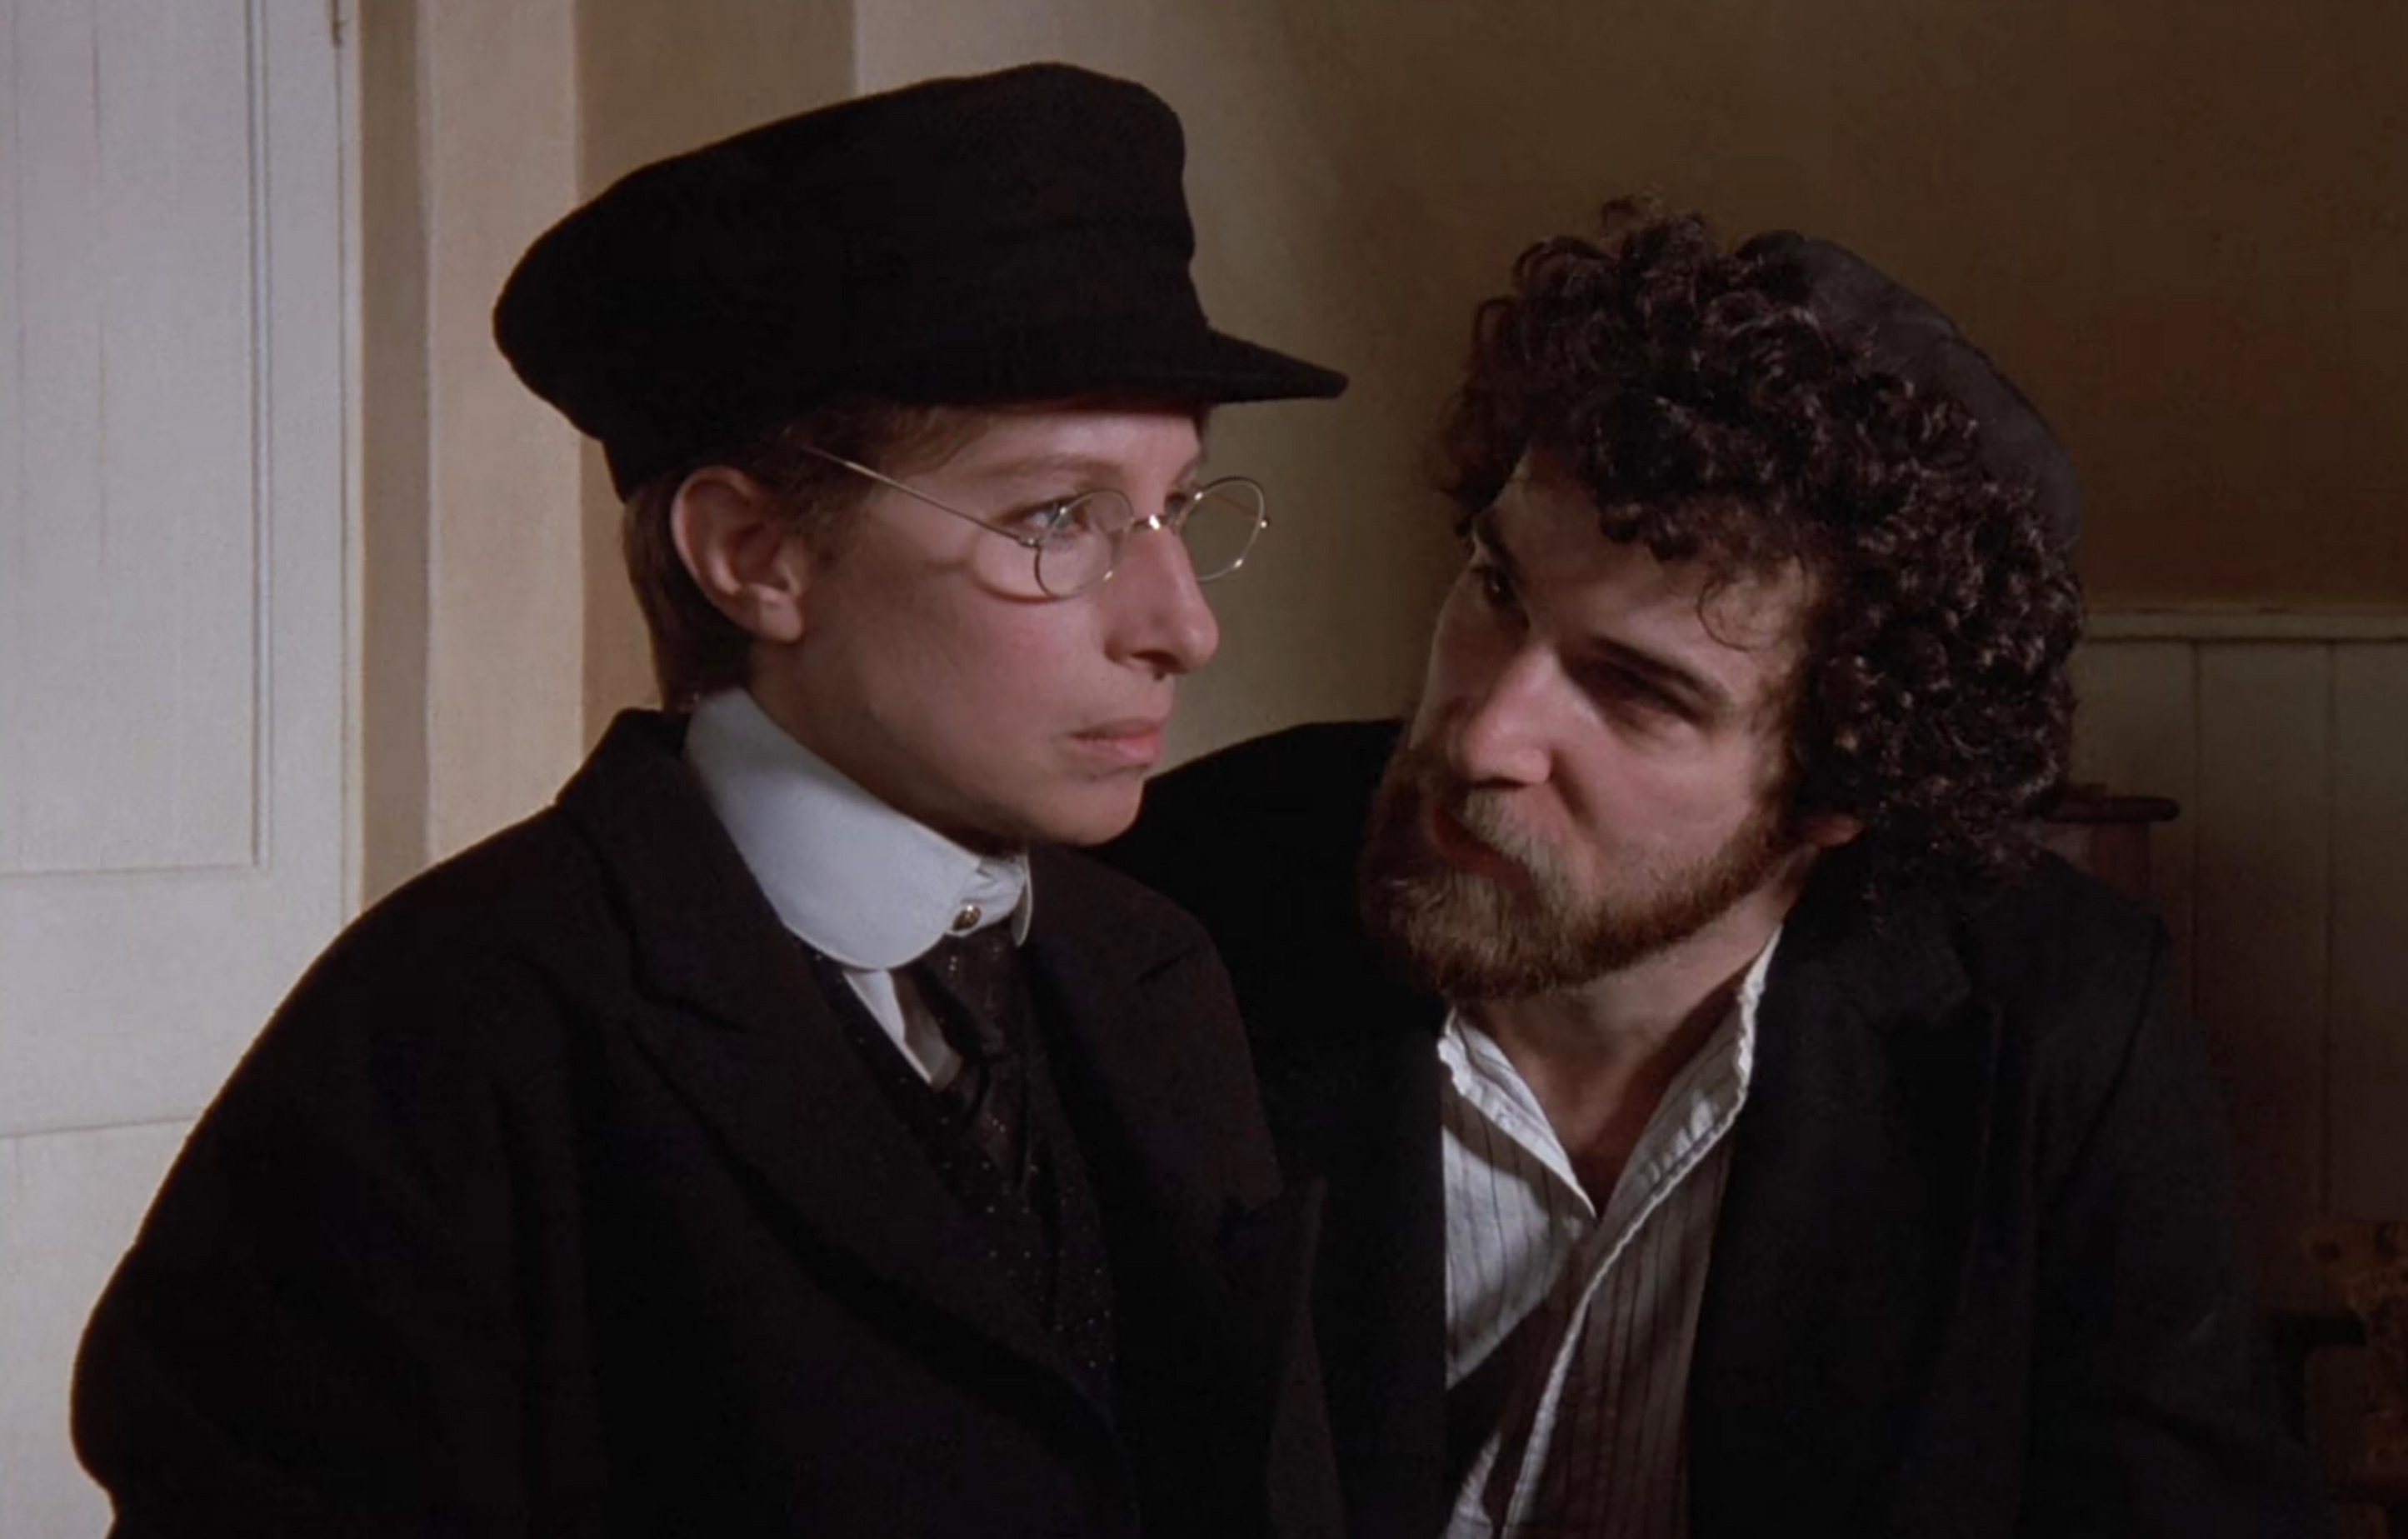 Barbra Streisand and Mandy Patinkin in “Yentl” (1983)